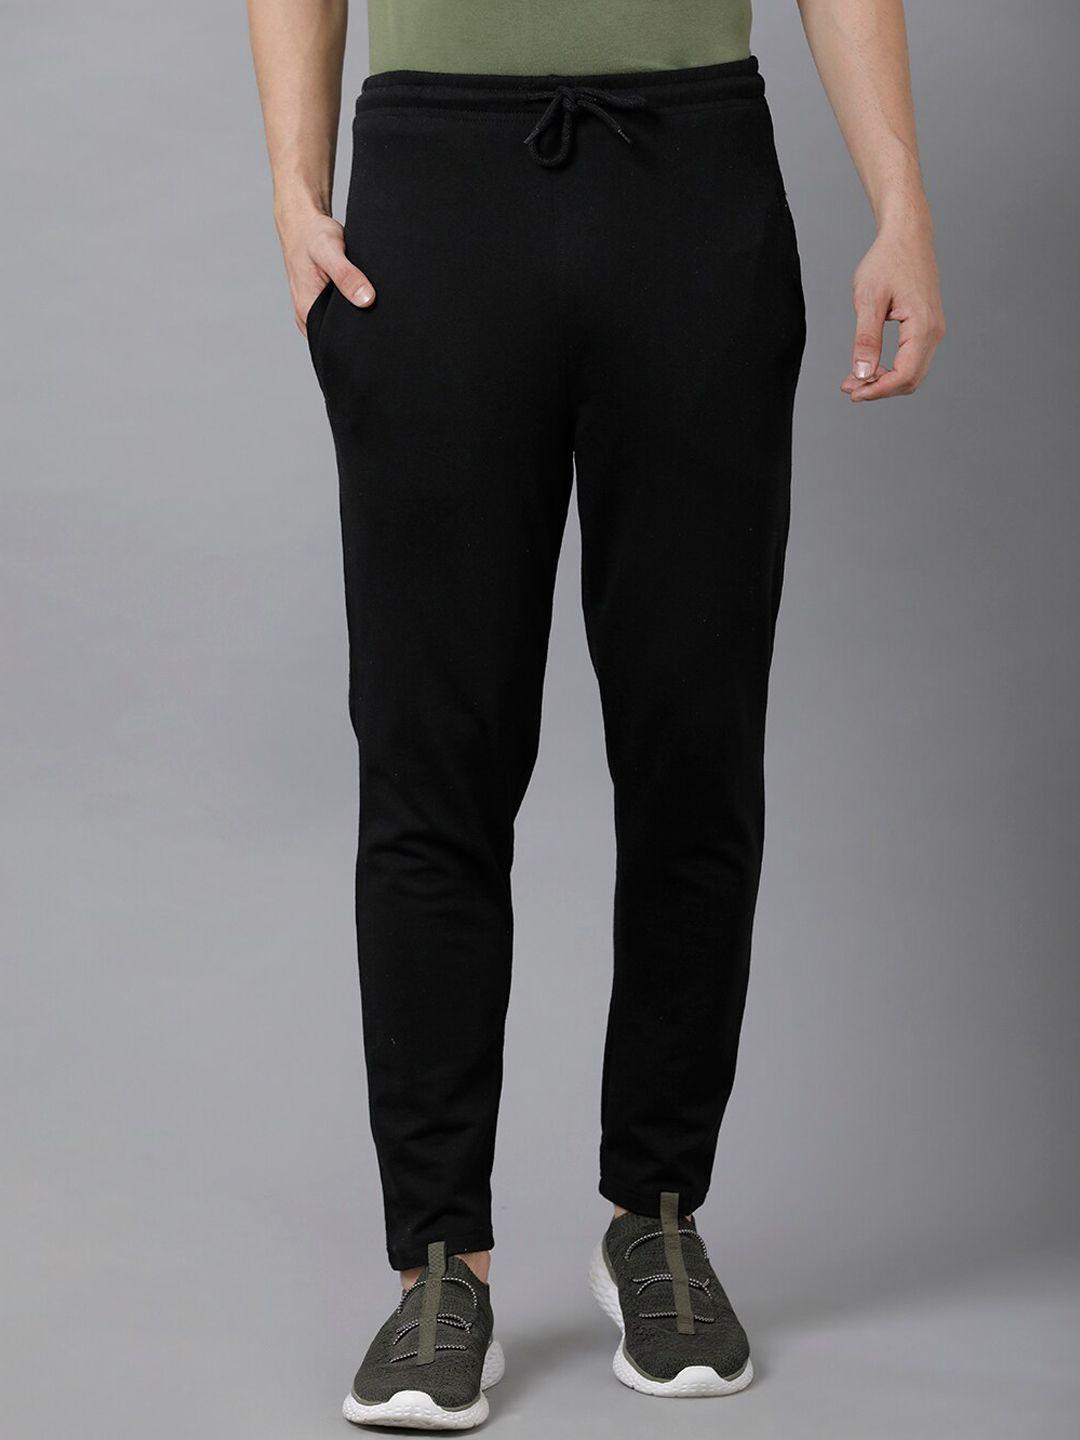 madsto men black solid pure cotton slim-fit track pants